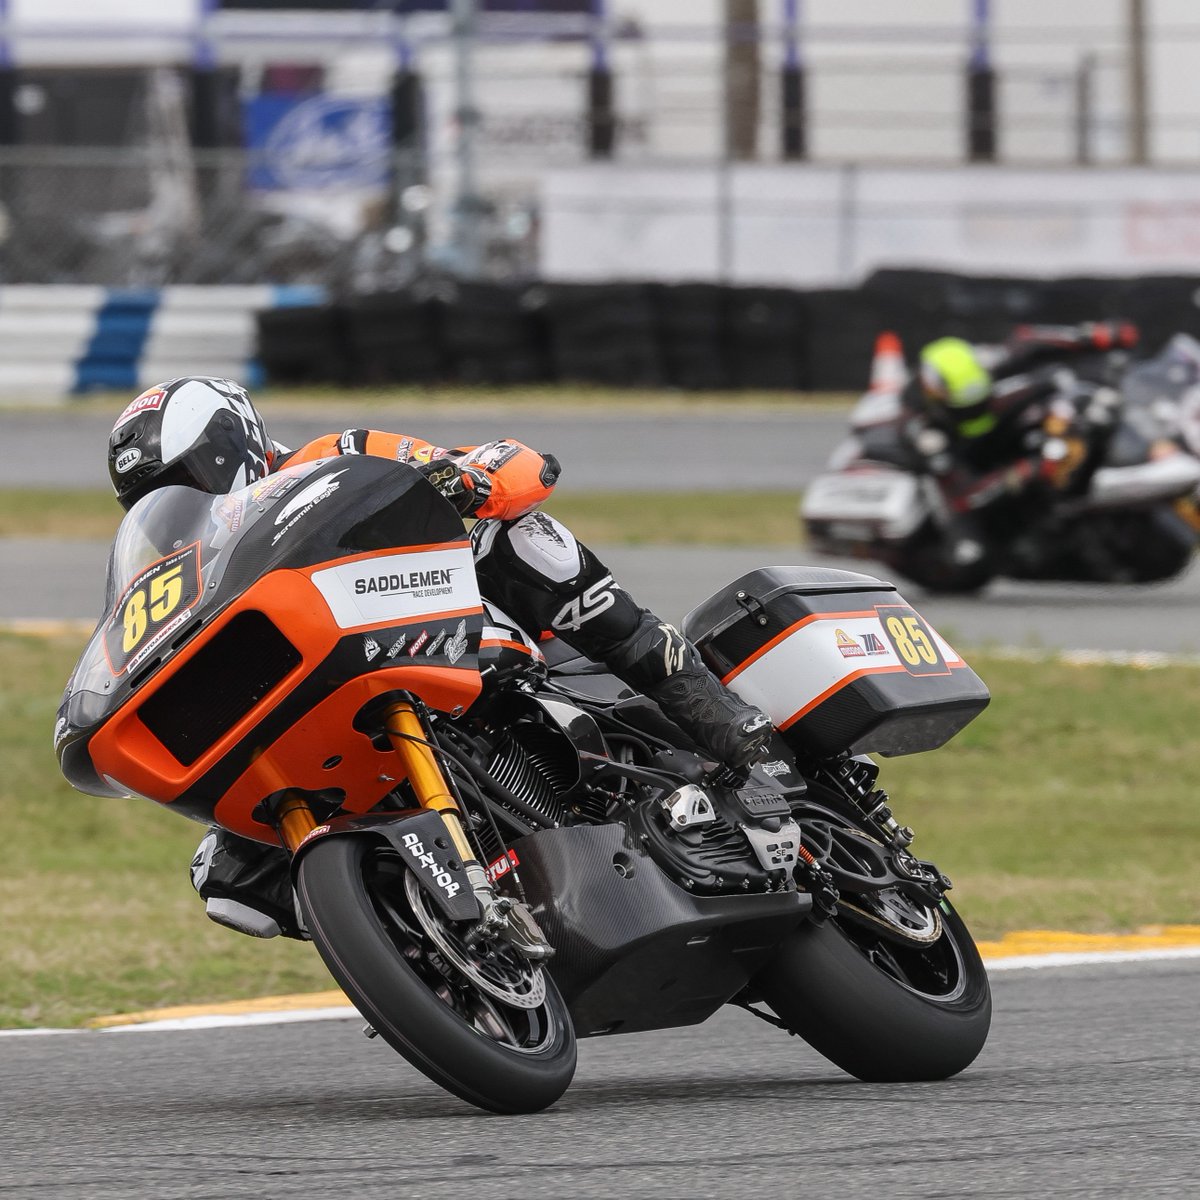 It's #MotoMonday. Show us your ride! 👊 

#MotoAmerica #Supersport #Baggers #Daytona